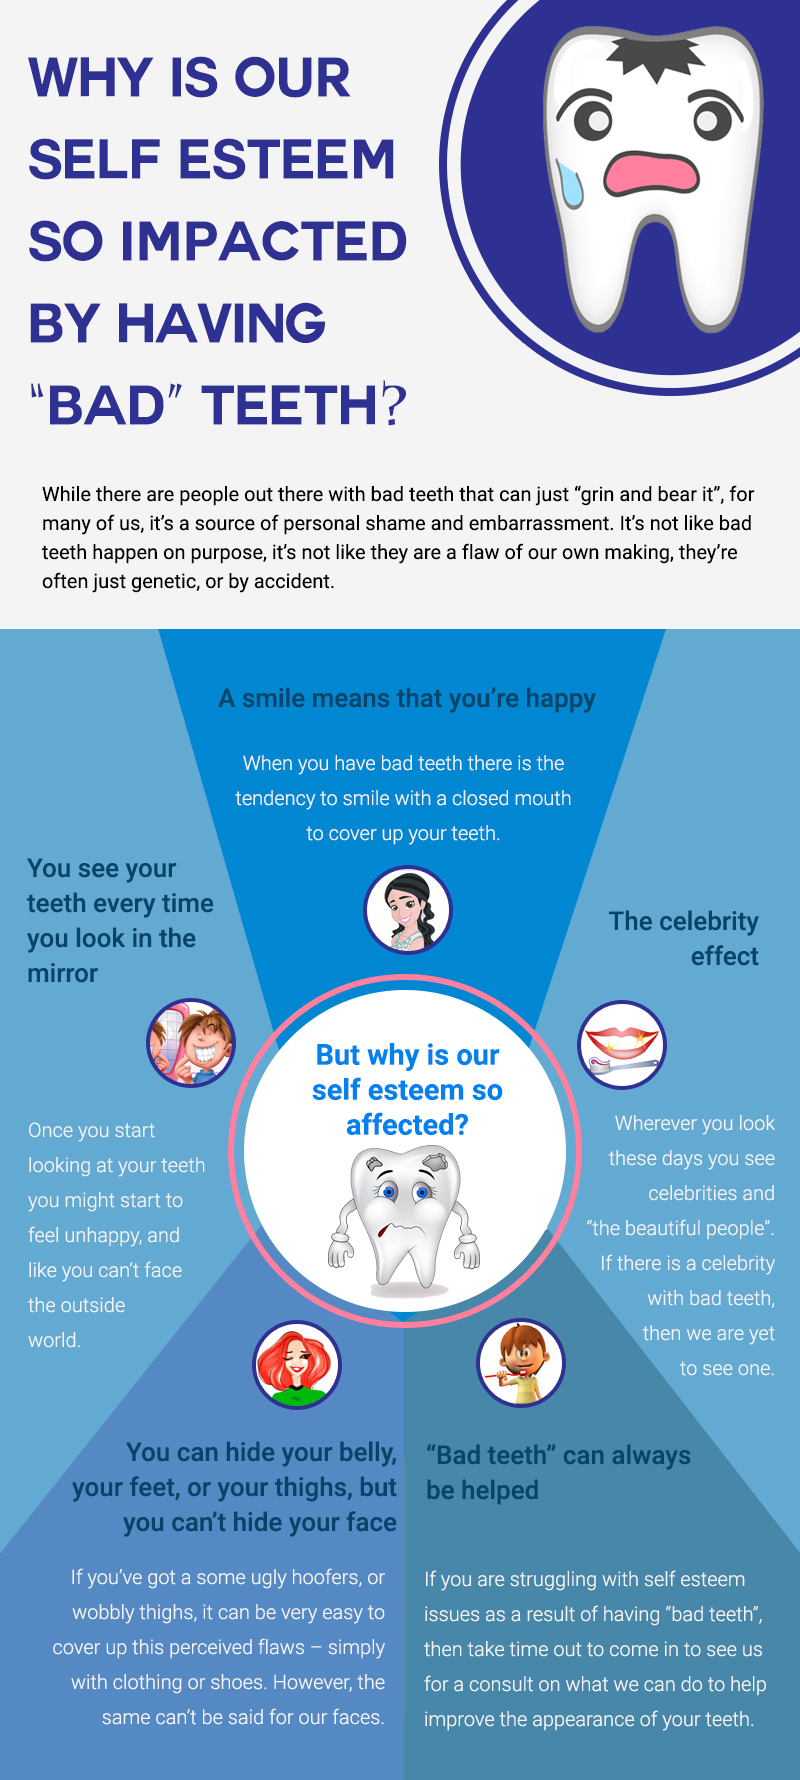 Why Is Our Self-Esteem So Impacted by Having Bad Teeth